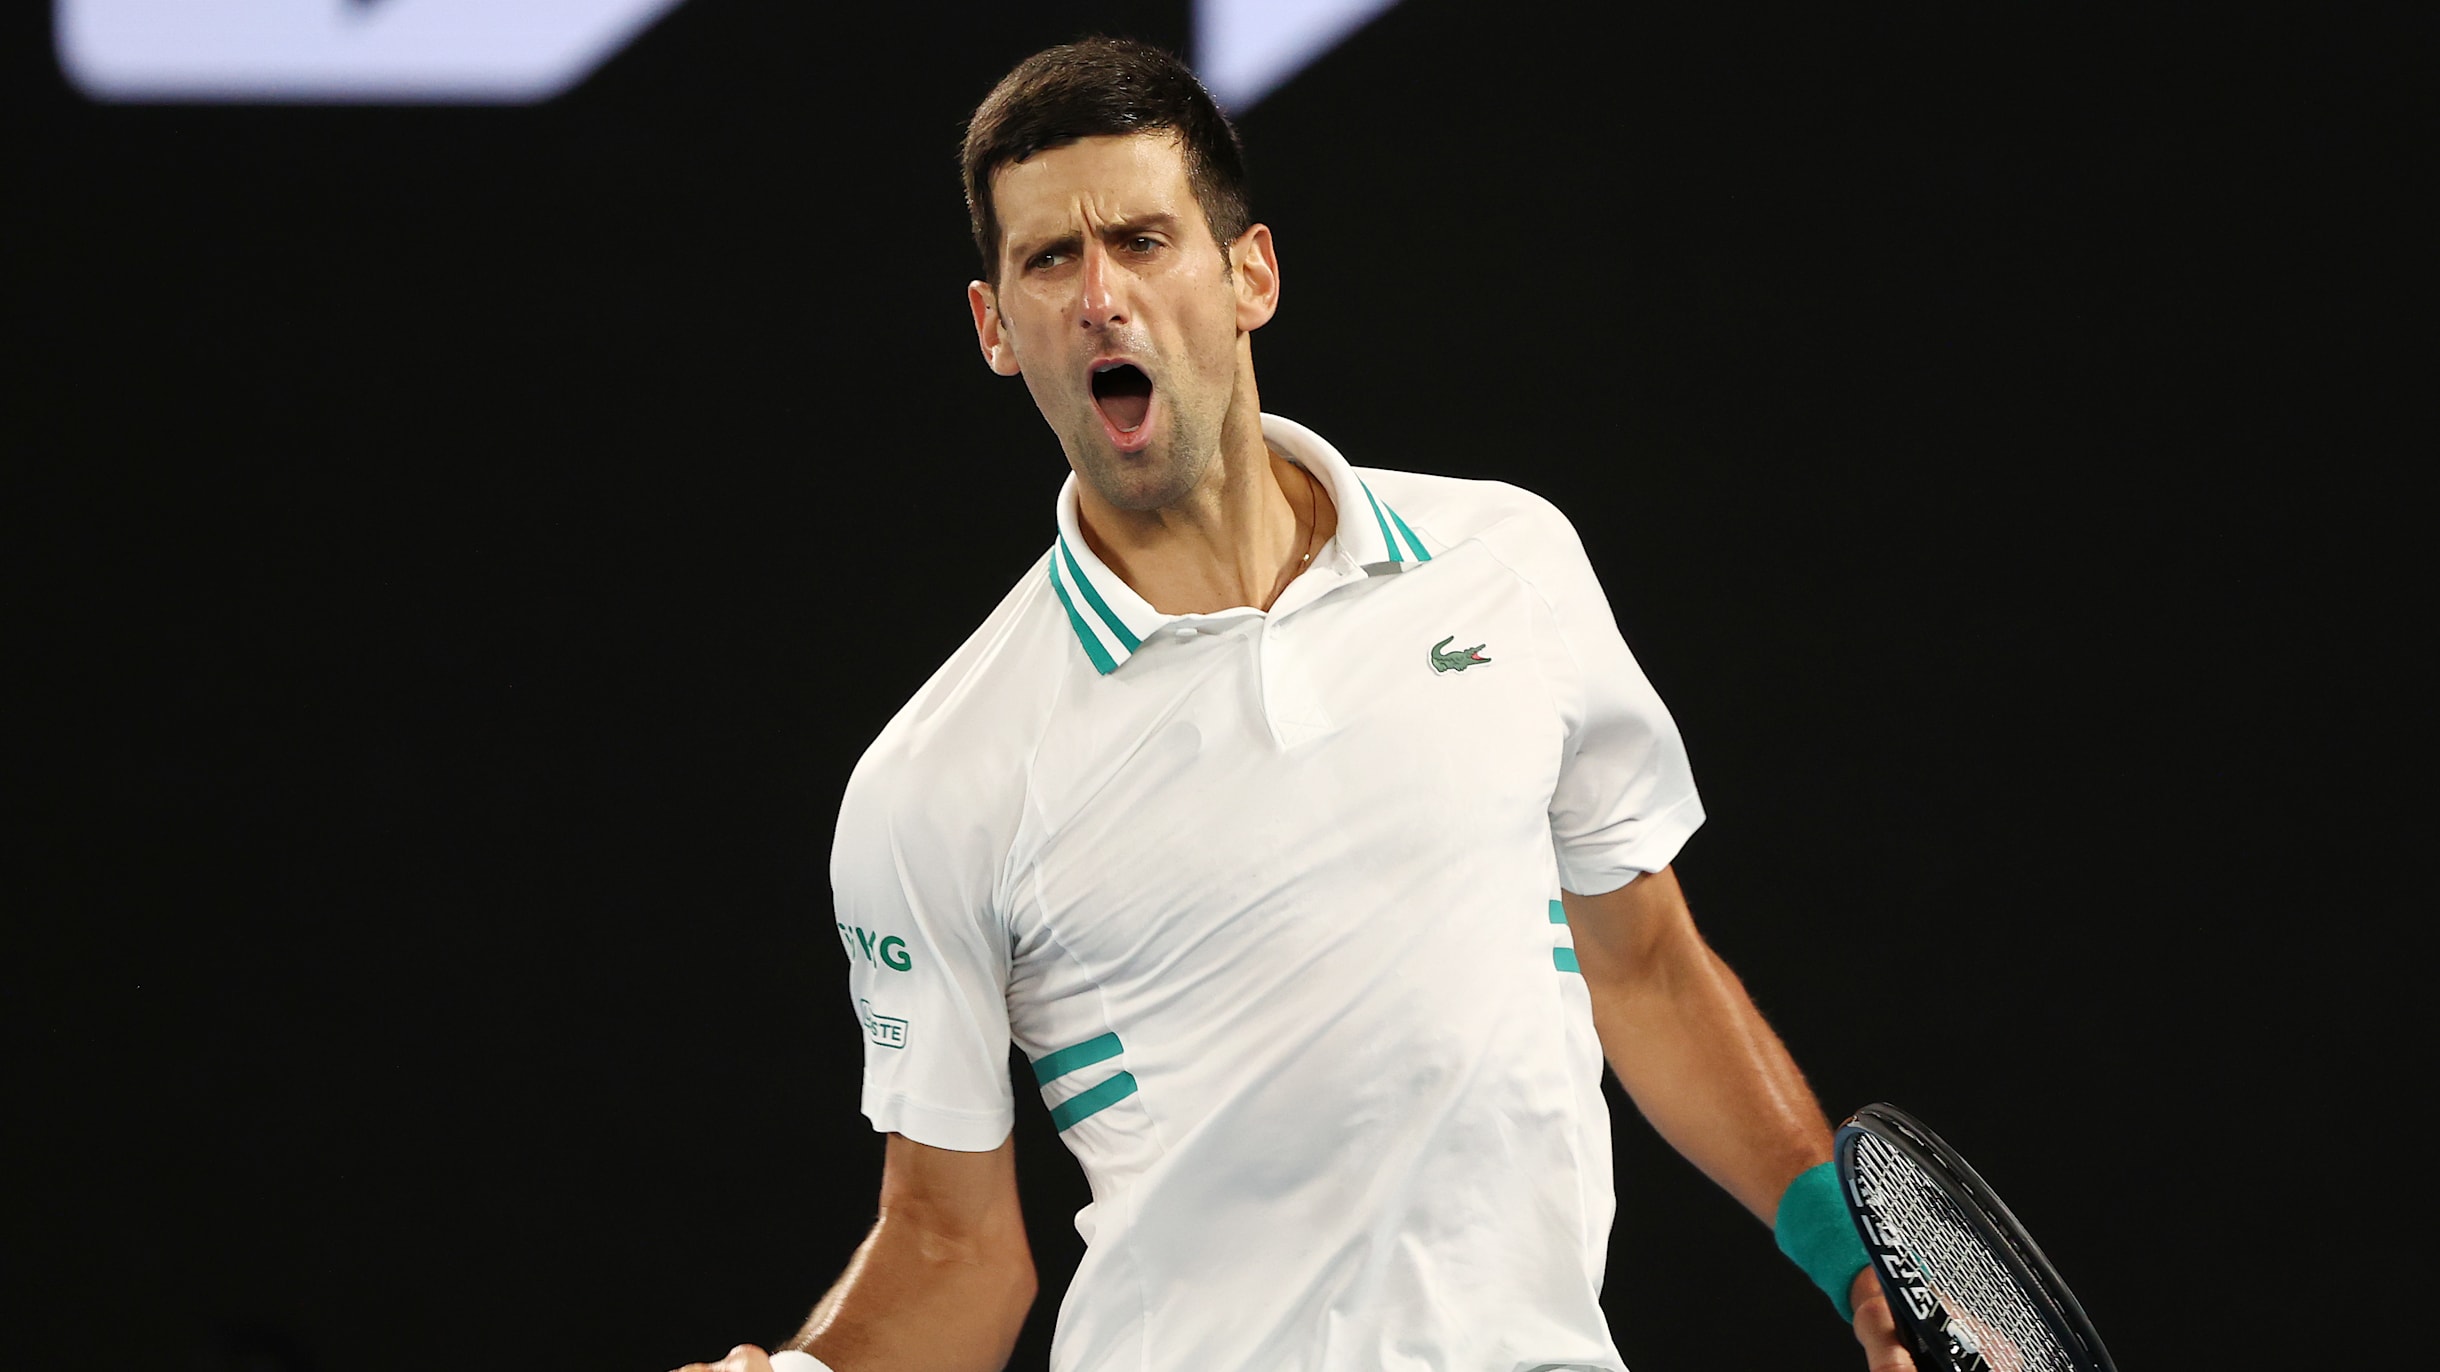 Top things to know about 2021 Australian Open winner Novak Djokovic